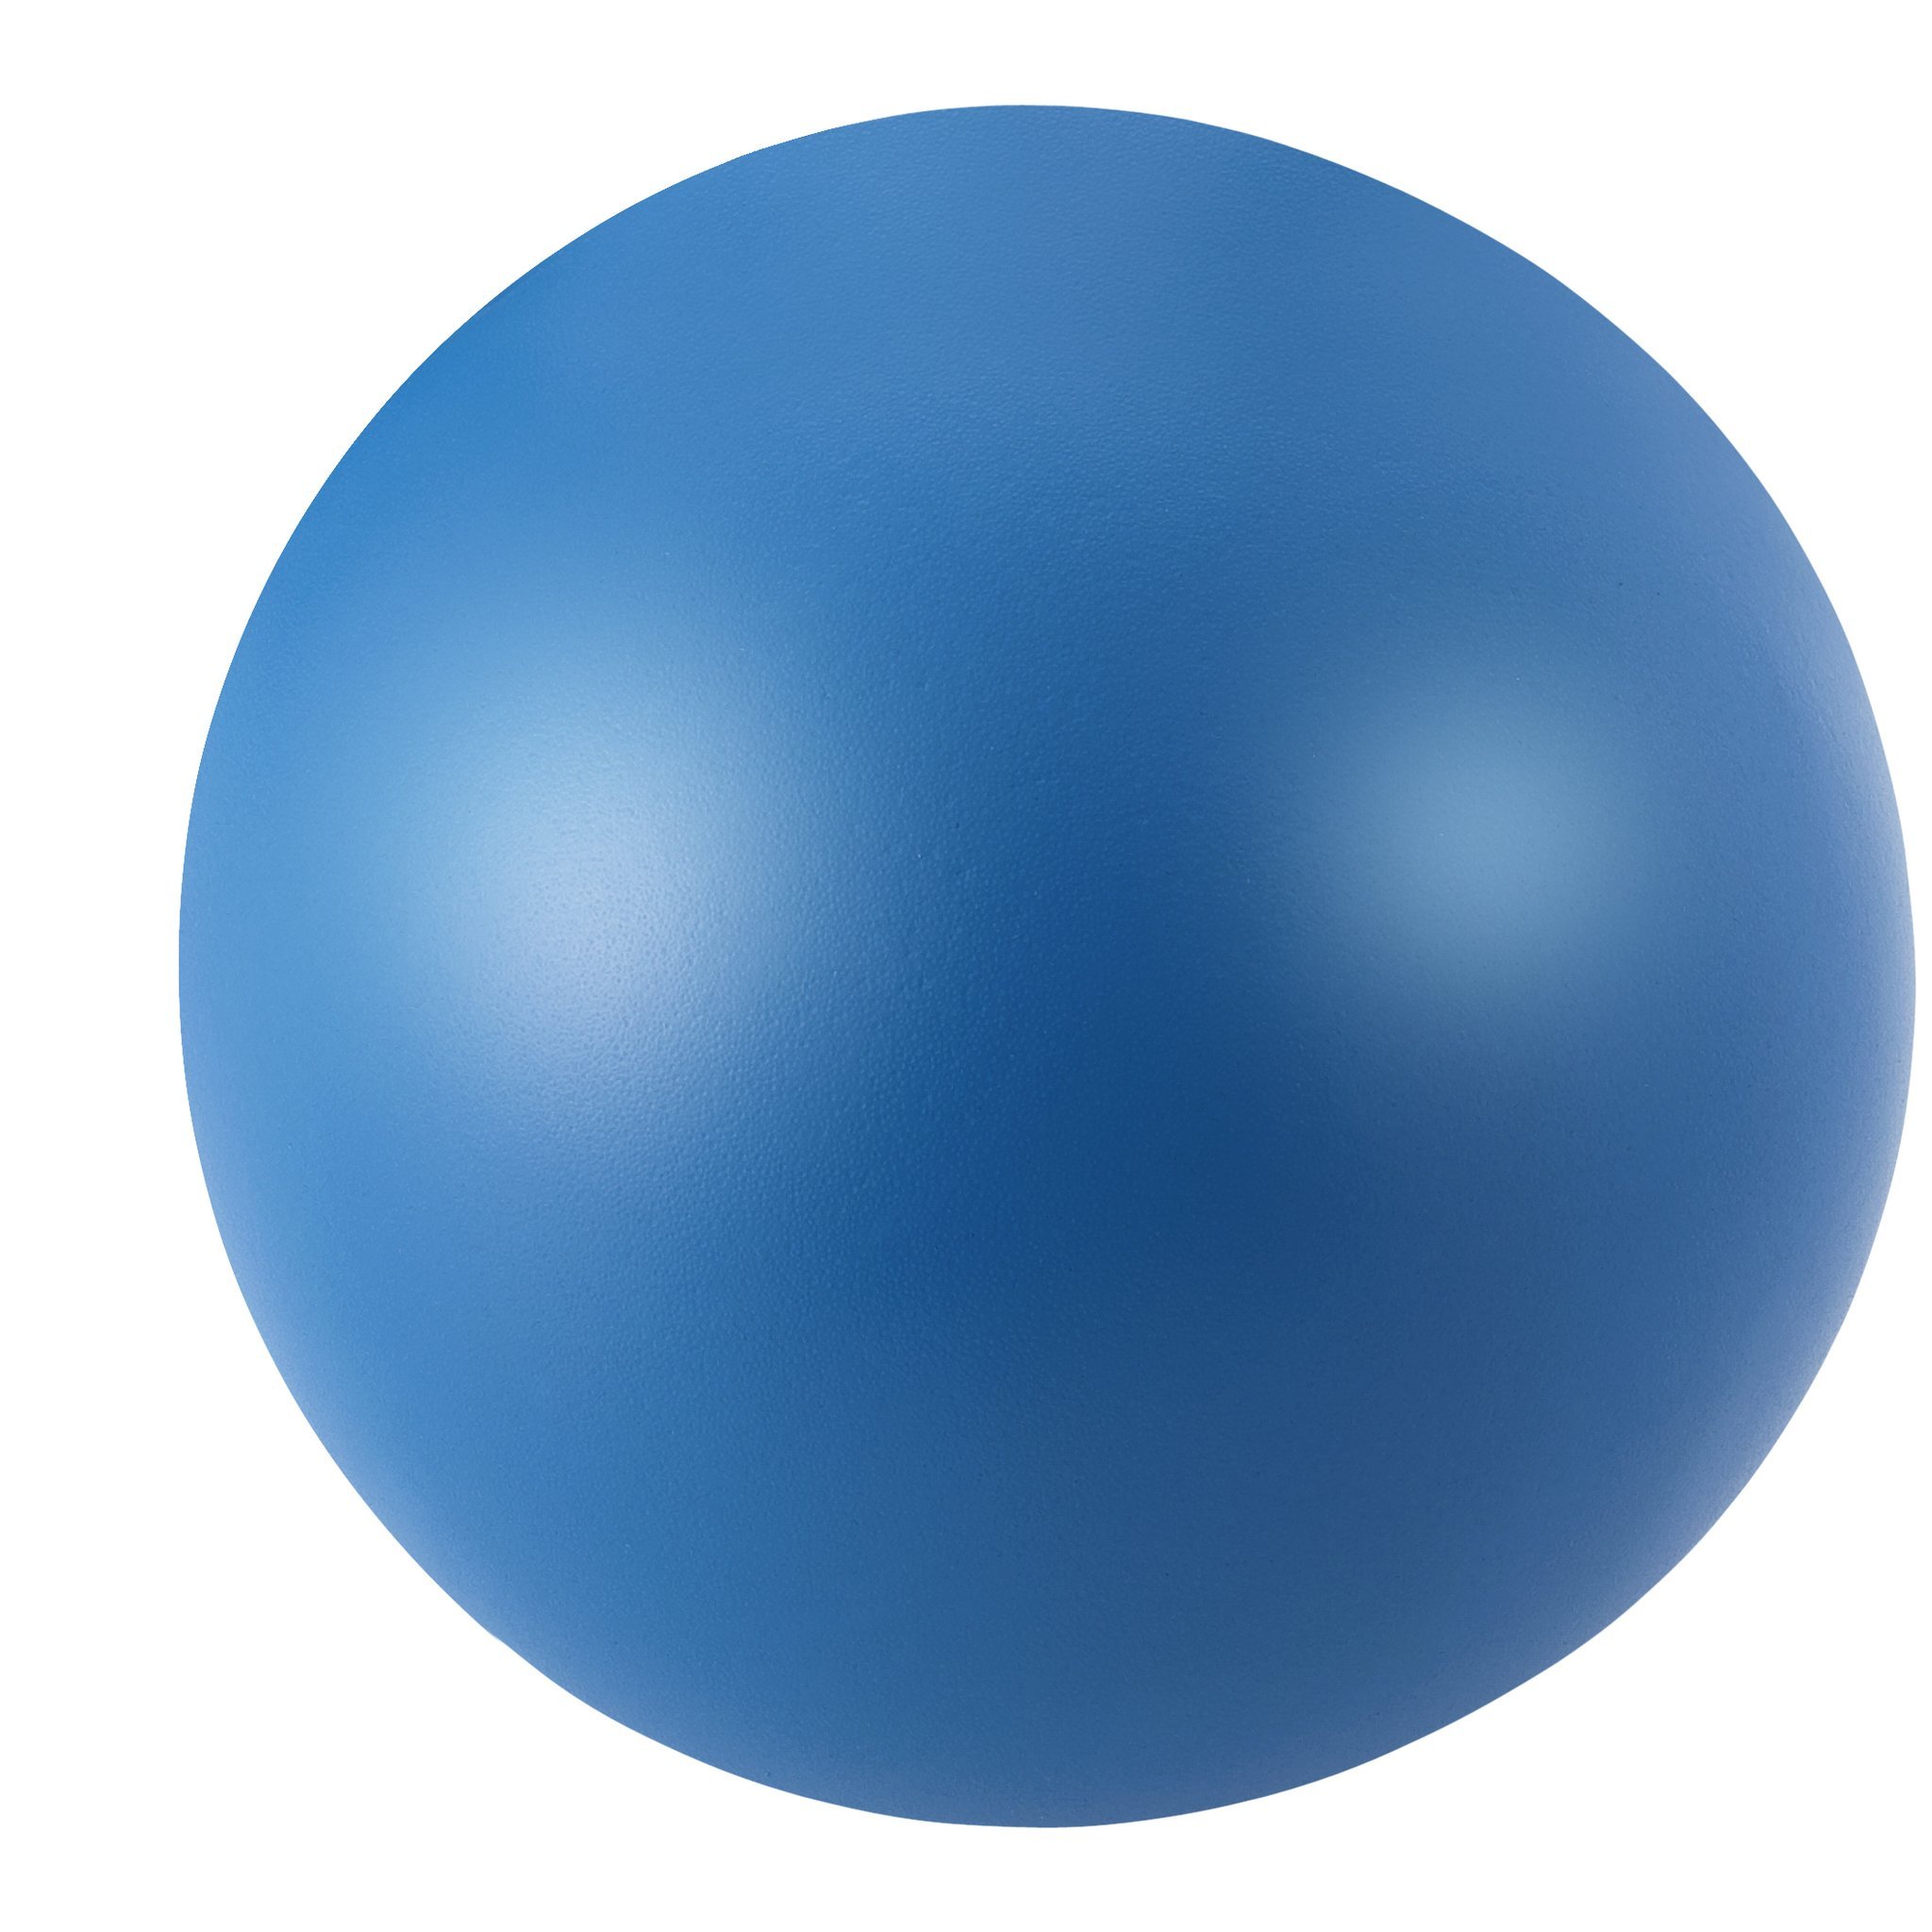 Шарик круглый. Синий шарик круглый. Мячик круглый. Матовый шар.